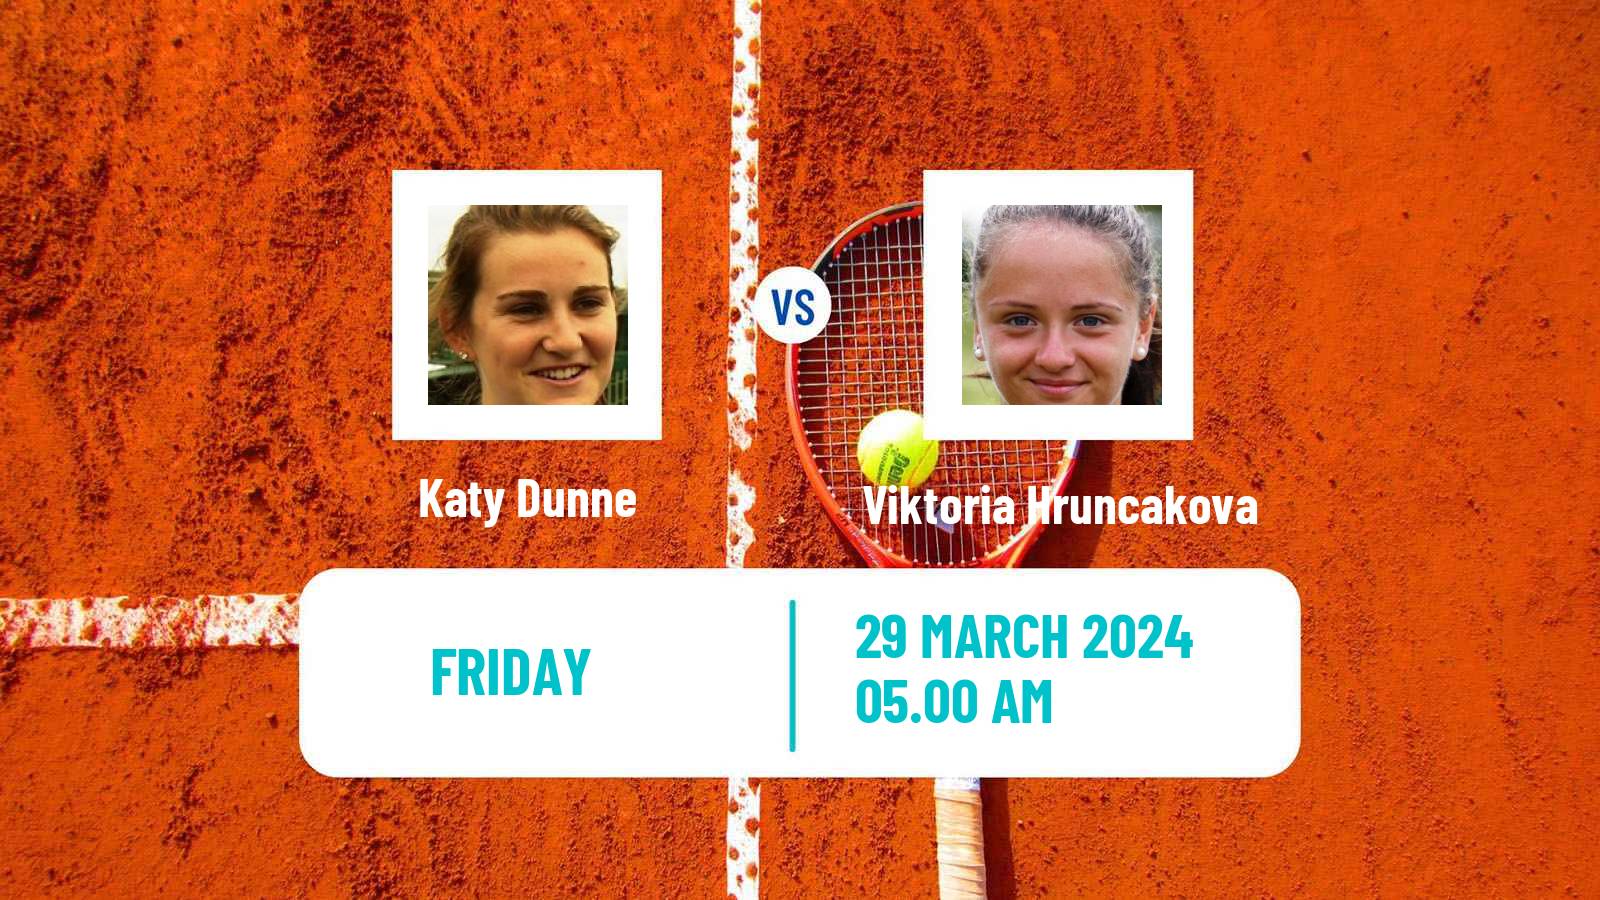 Tennis ITF W50 Murska Sobota Women Katy Dunne - Viktoria Hruncakova